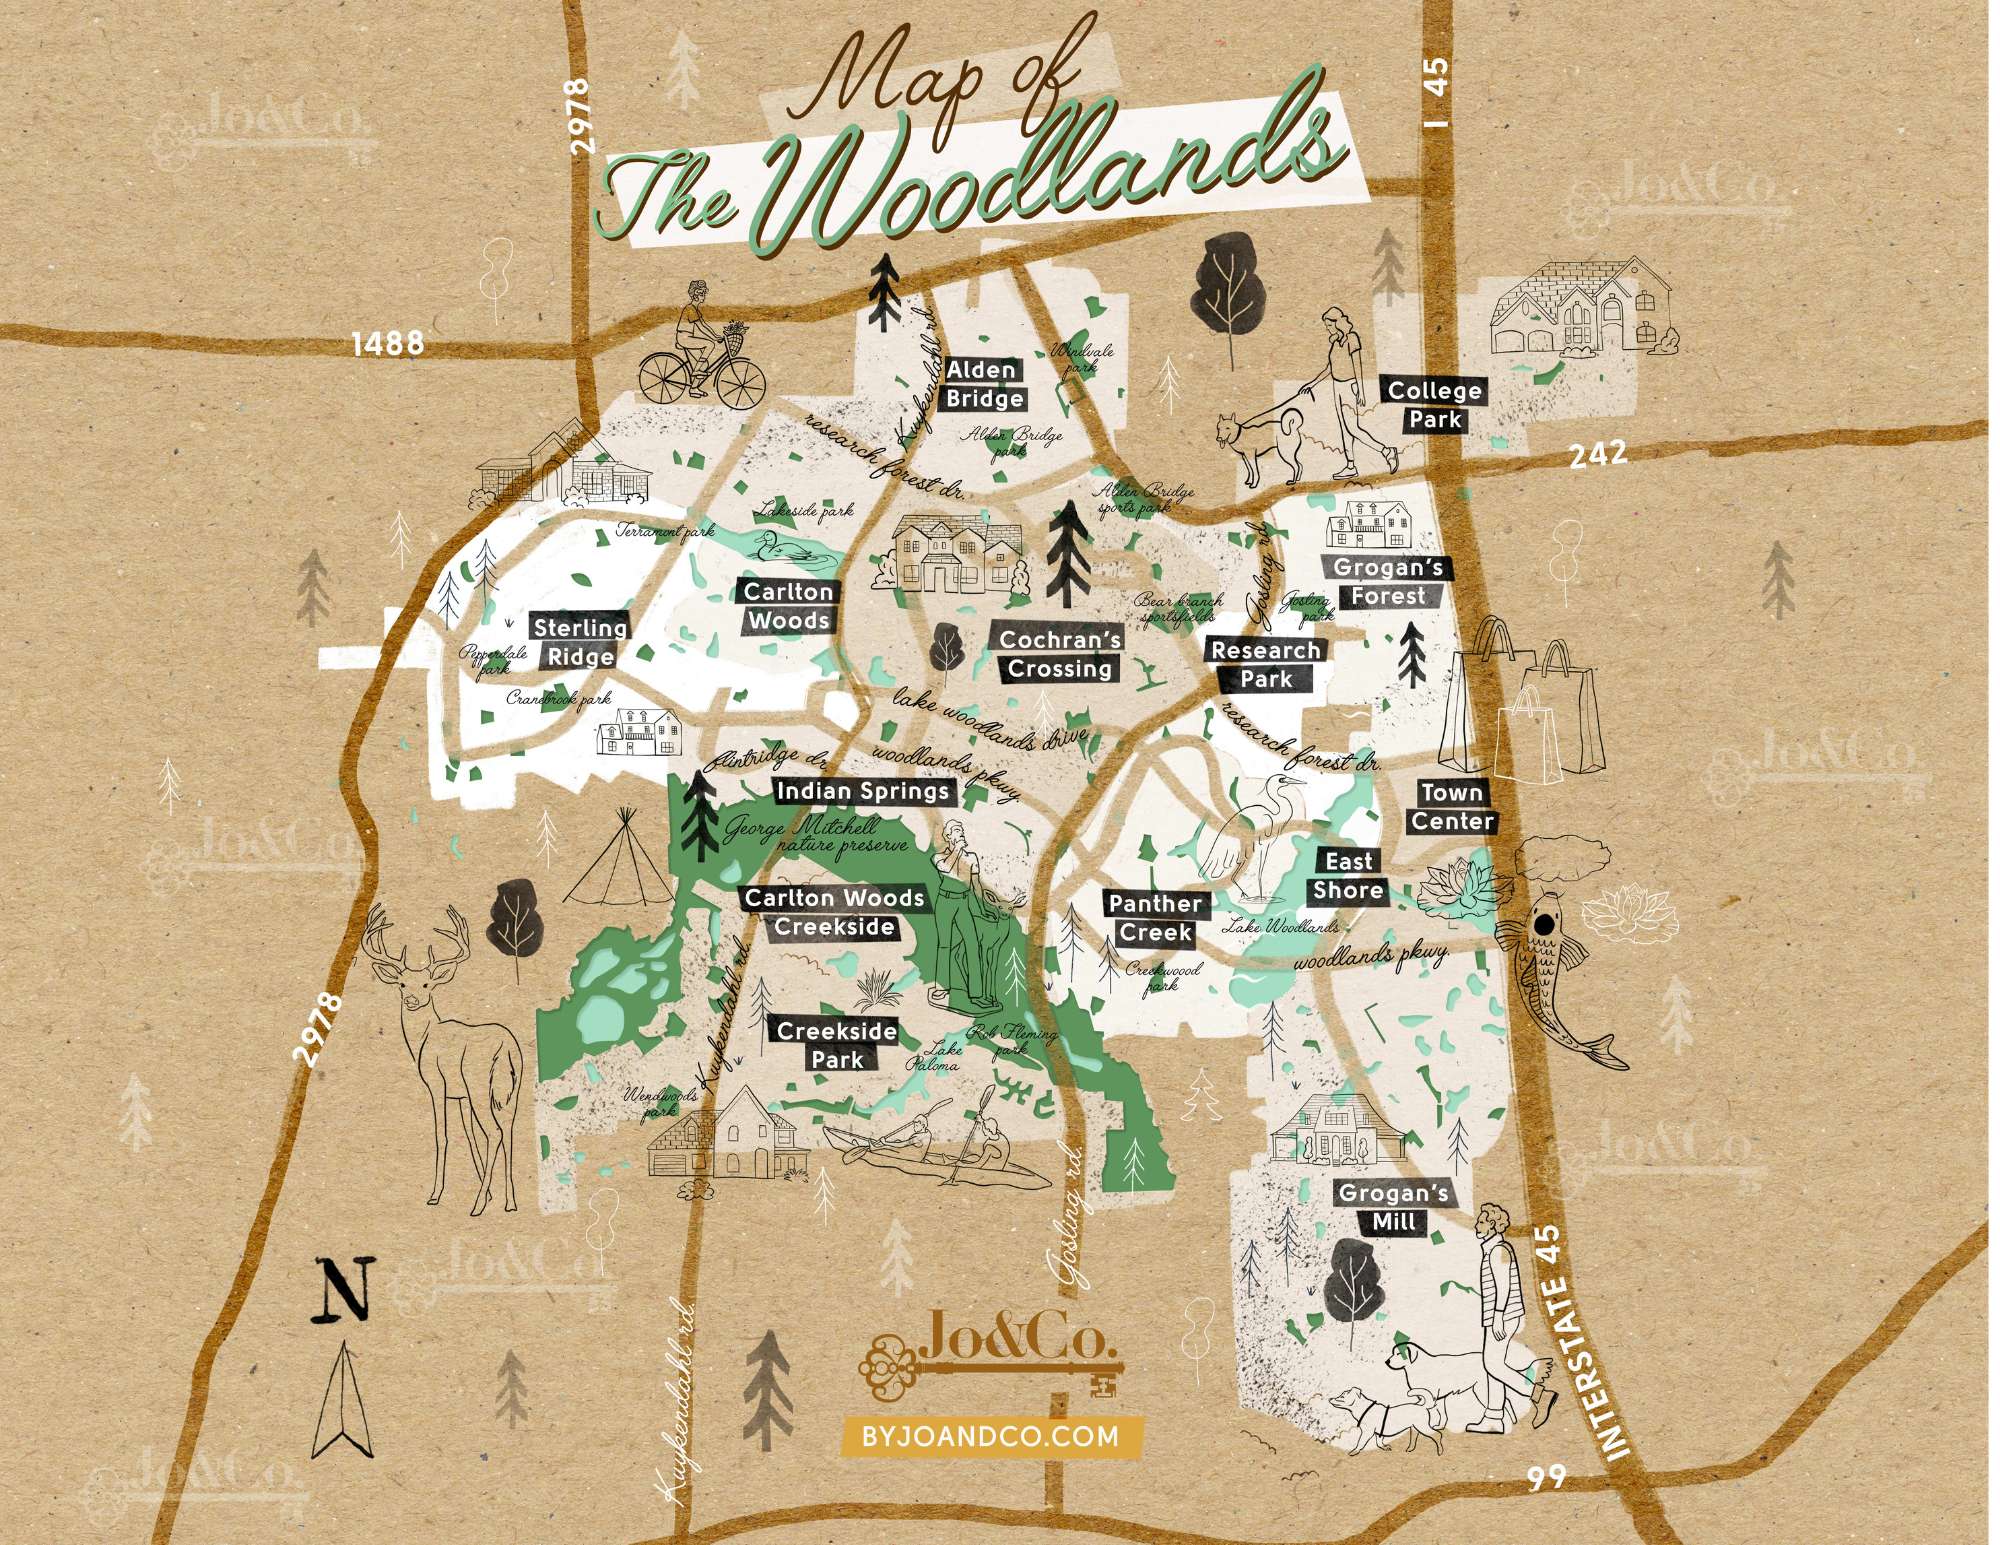 The Woodlands Guide - The Woodlands Market Street